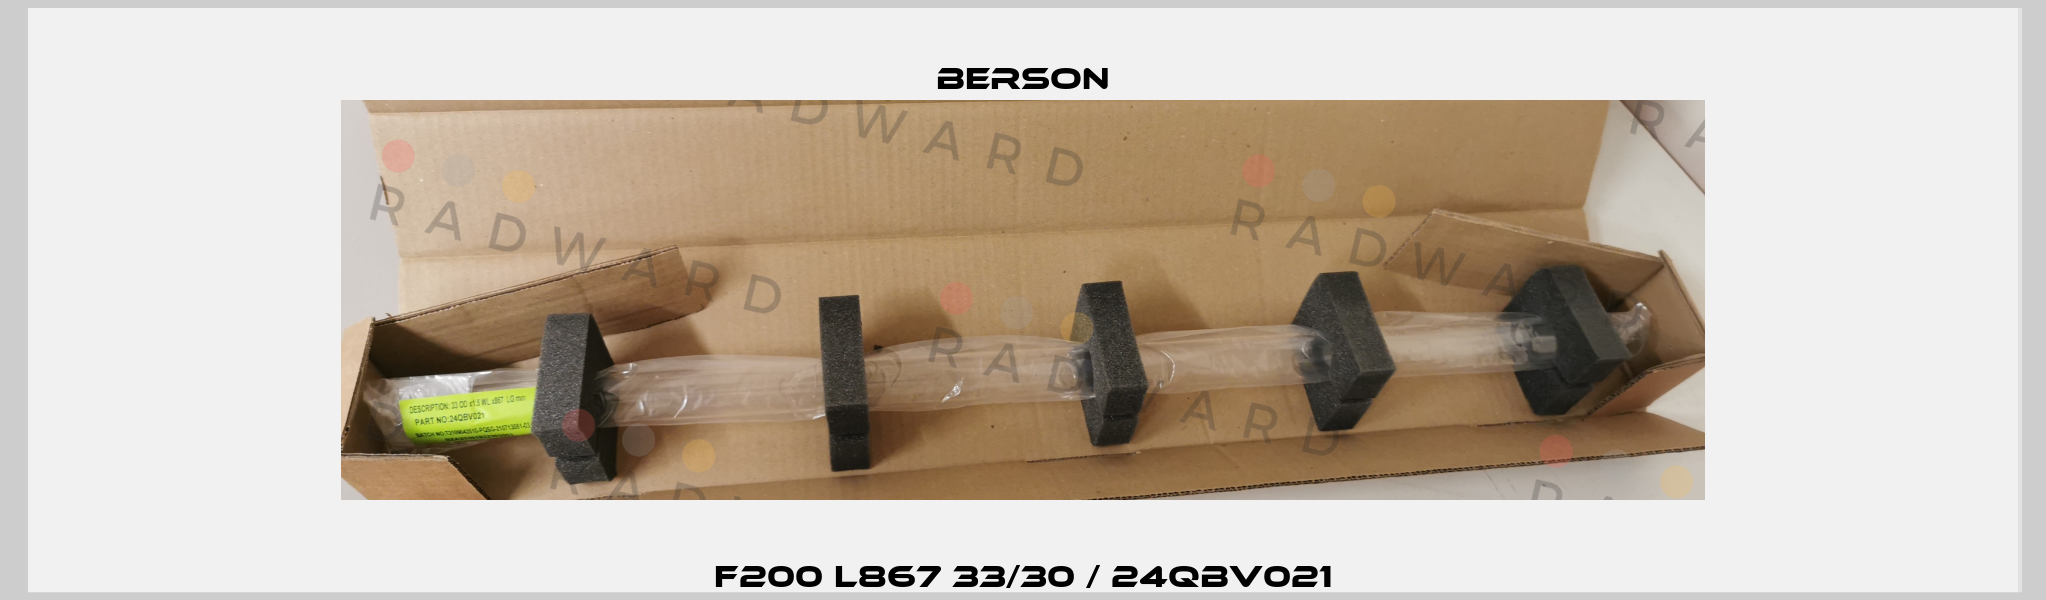 F200 L867 33/30 / 24QBV021 Berson